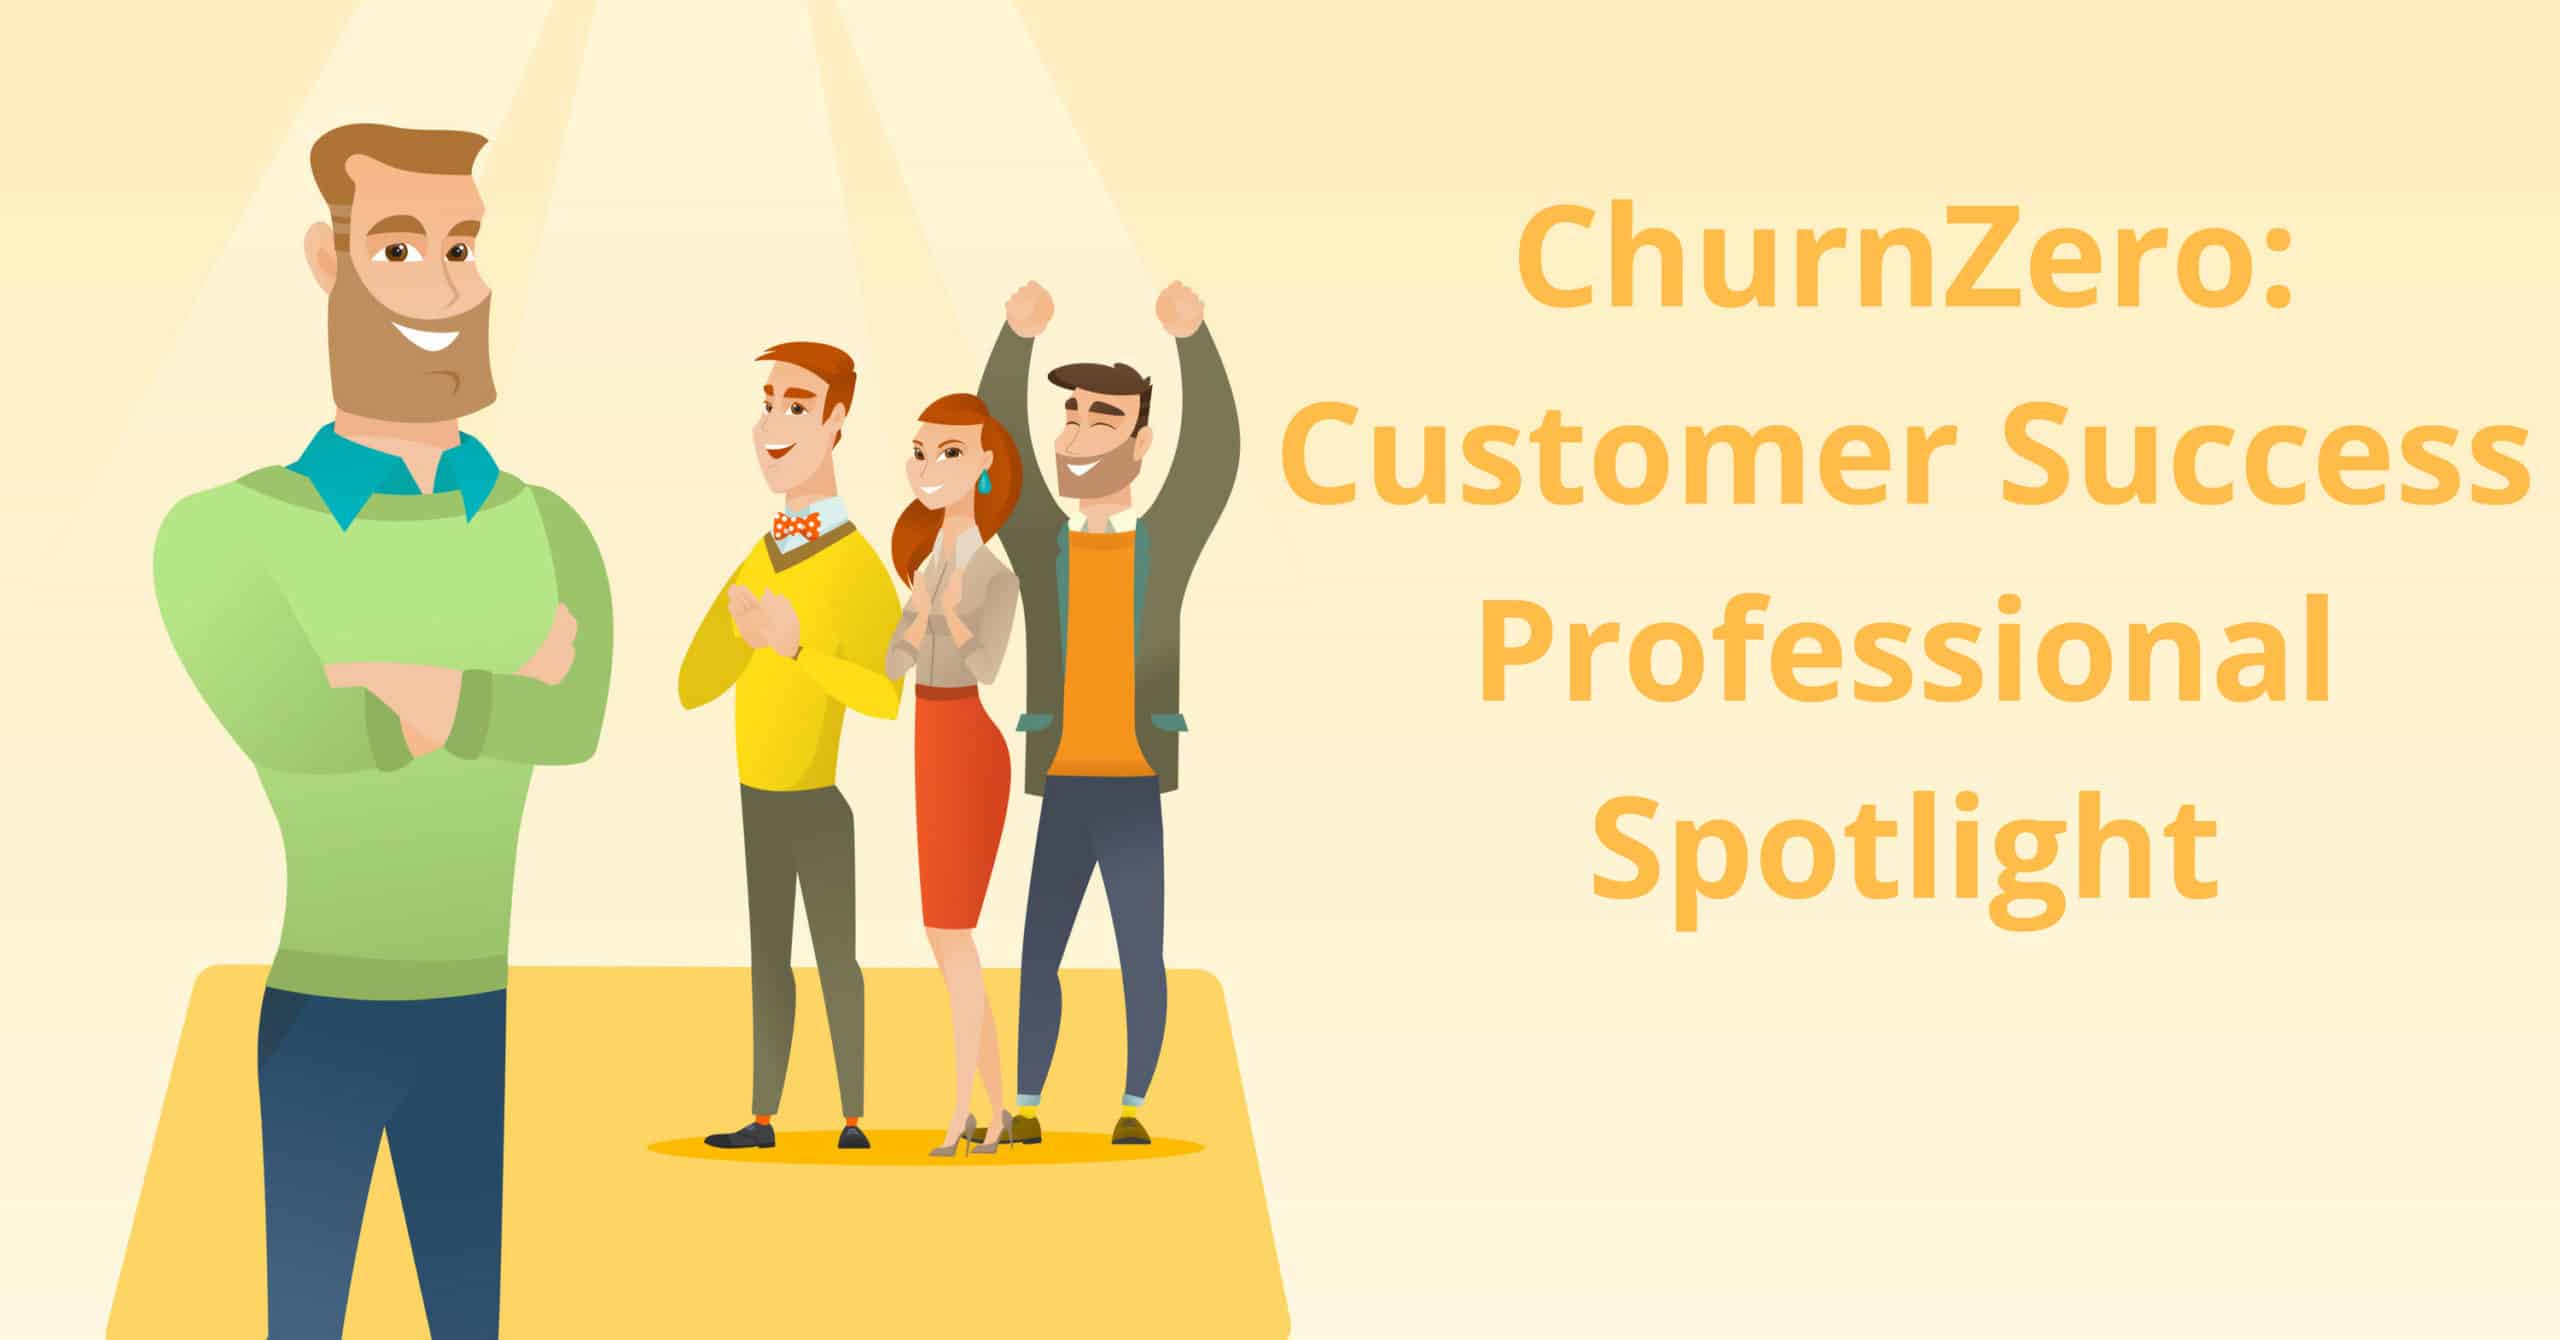 churnzero customer success professional spotlight